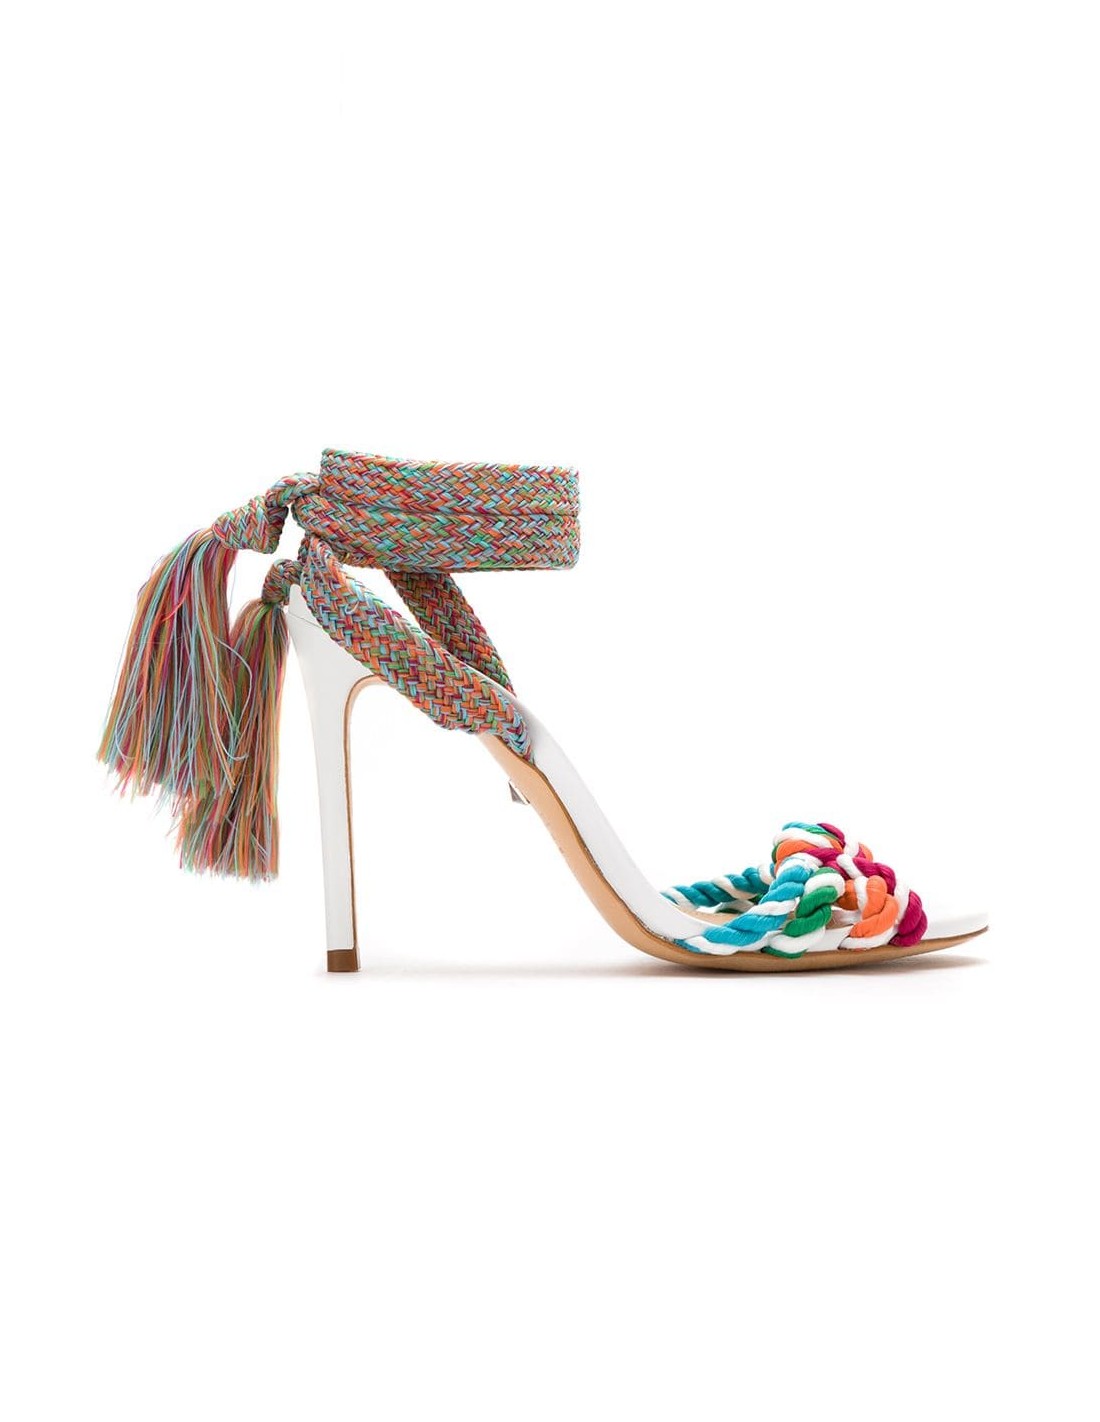 Schutz Sandals with Heel, Strings and Knots | altamoda.shop